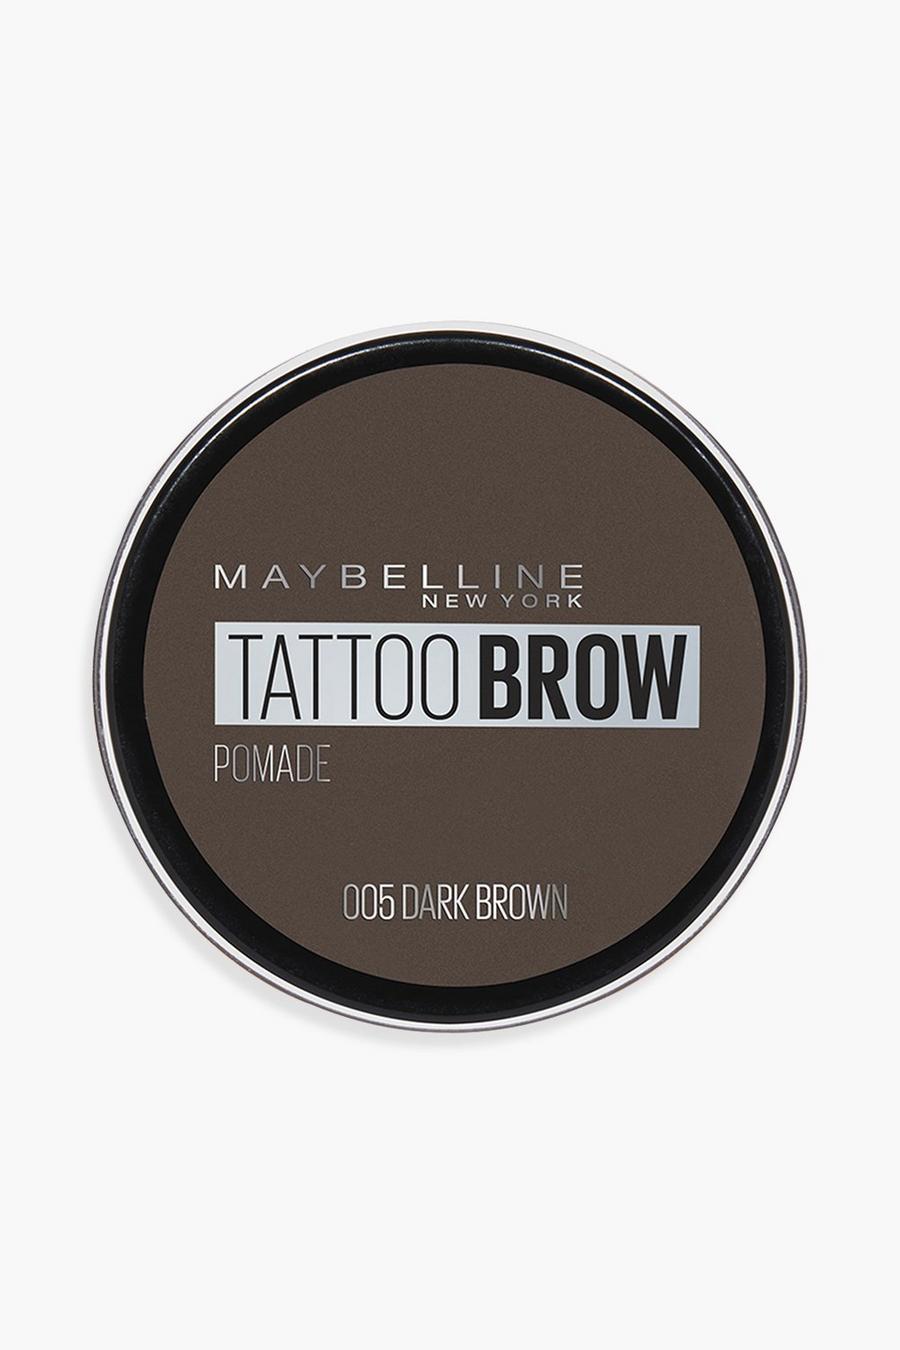 Maybelline Tattoo Brow Augenbrauen-Pomade, 05 dark brown image number 1